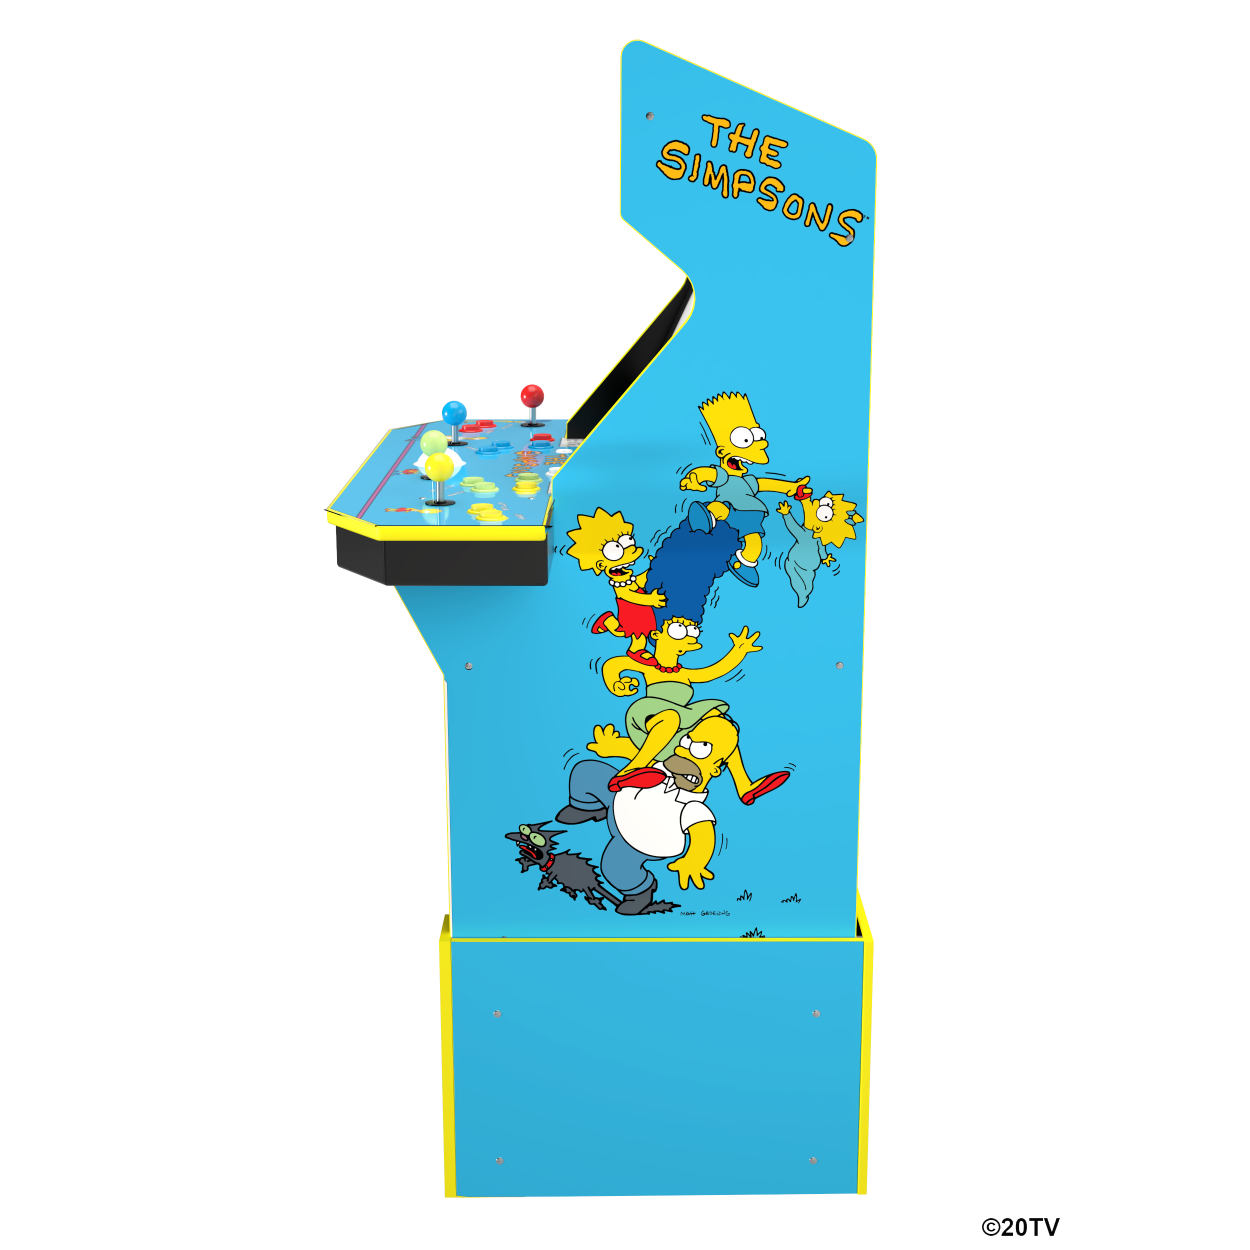 Simpsons Arcade Machine